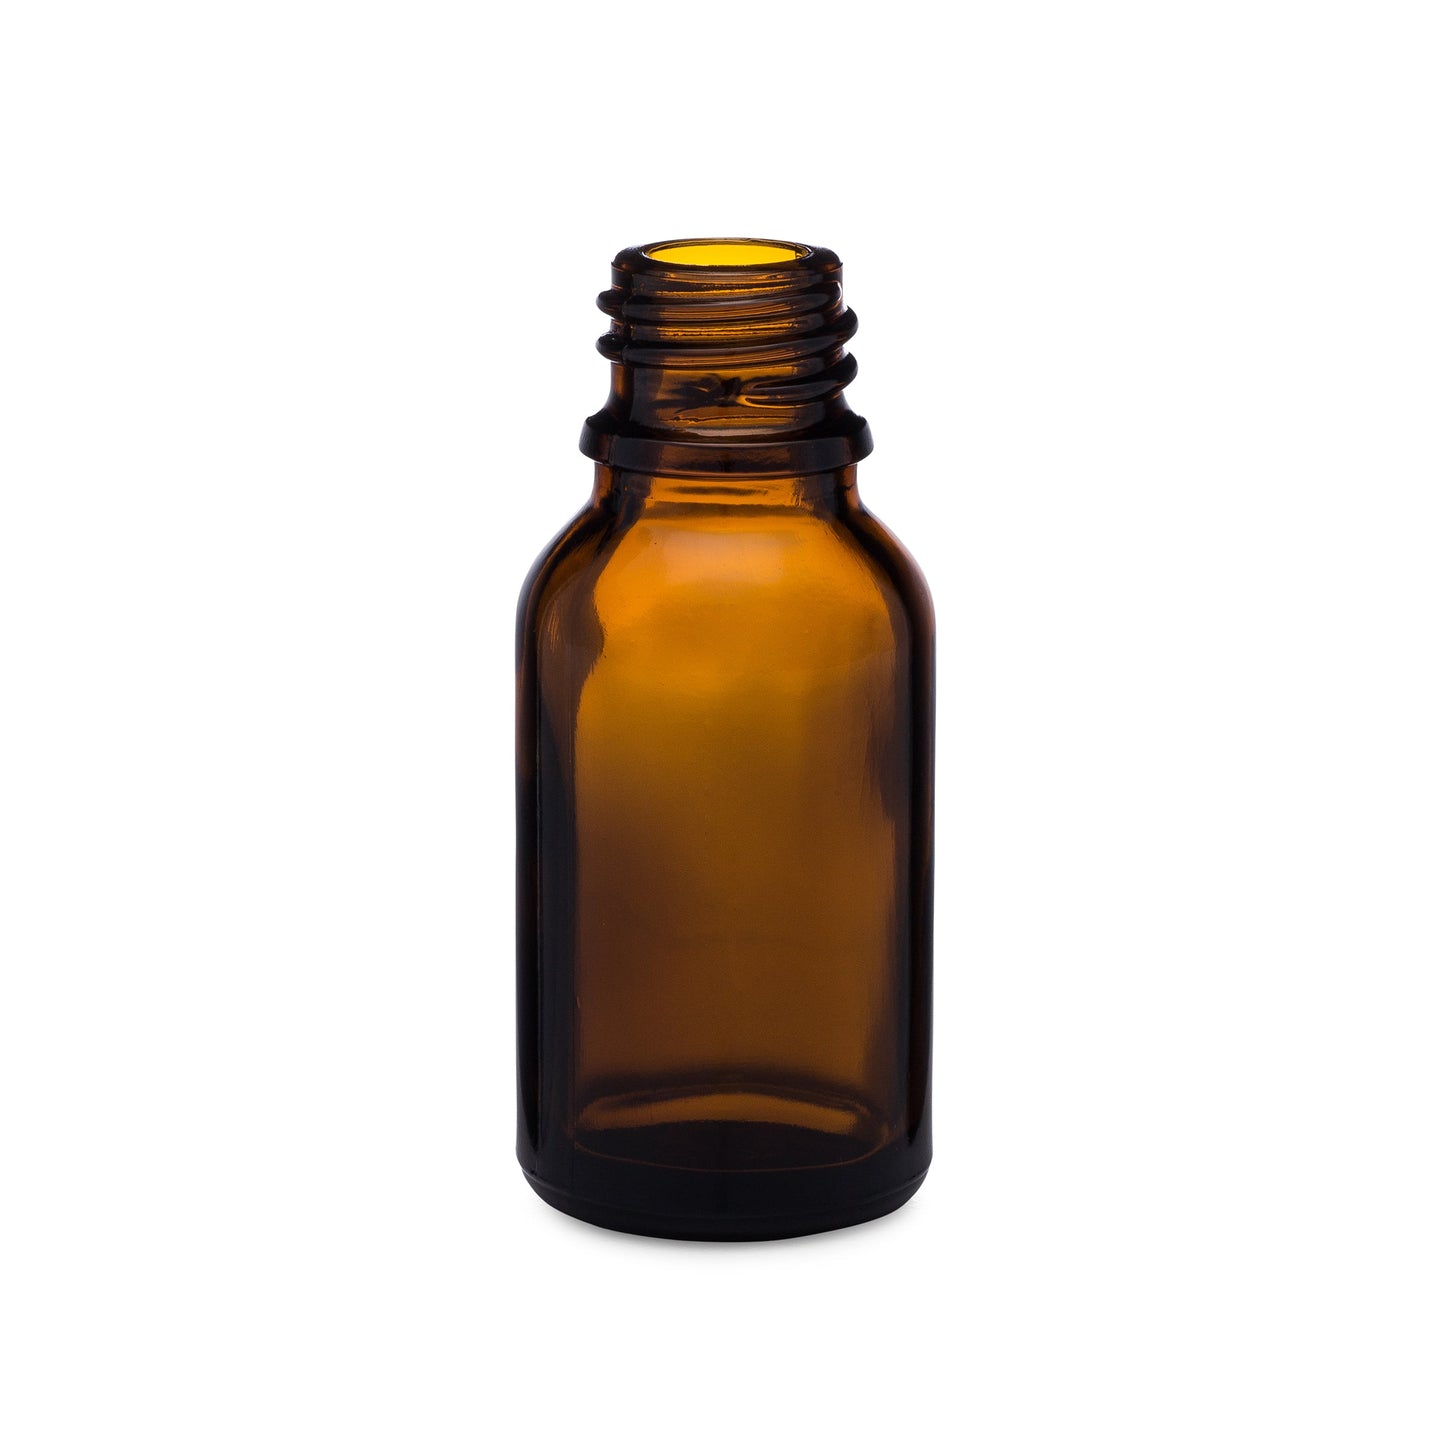 15 ml Euro Amber Essential Oil Bottles (12-Pack)